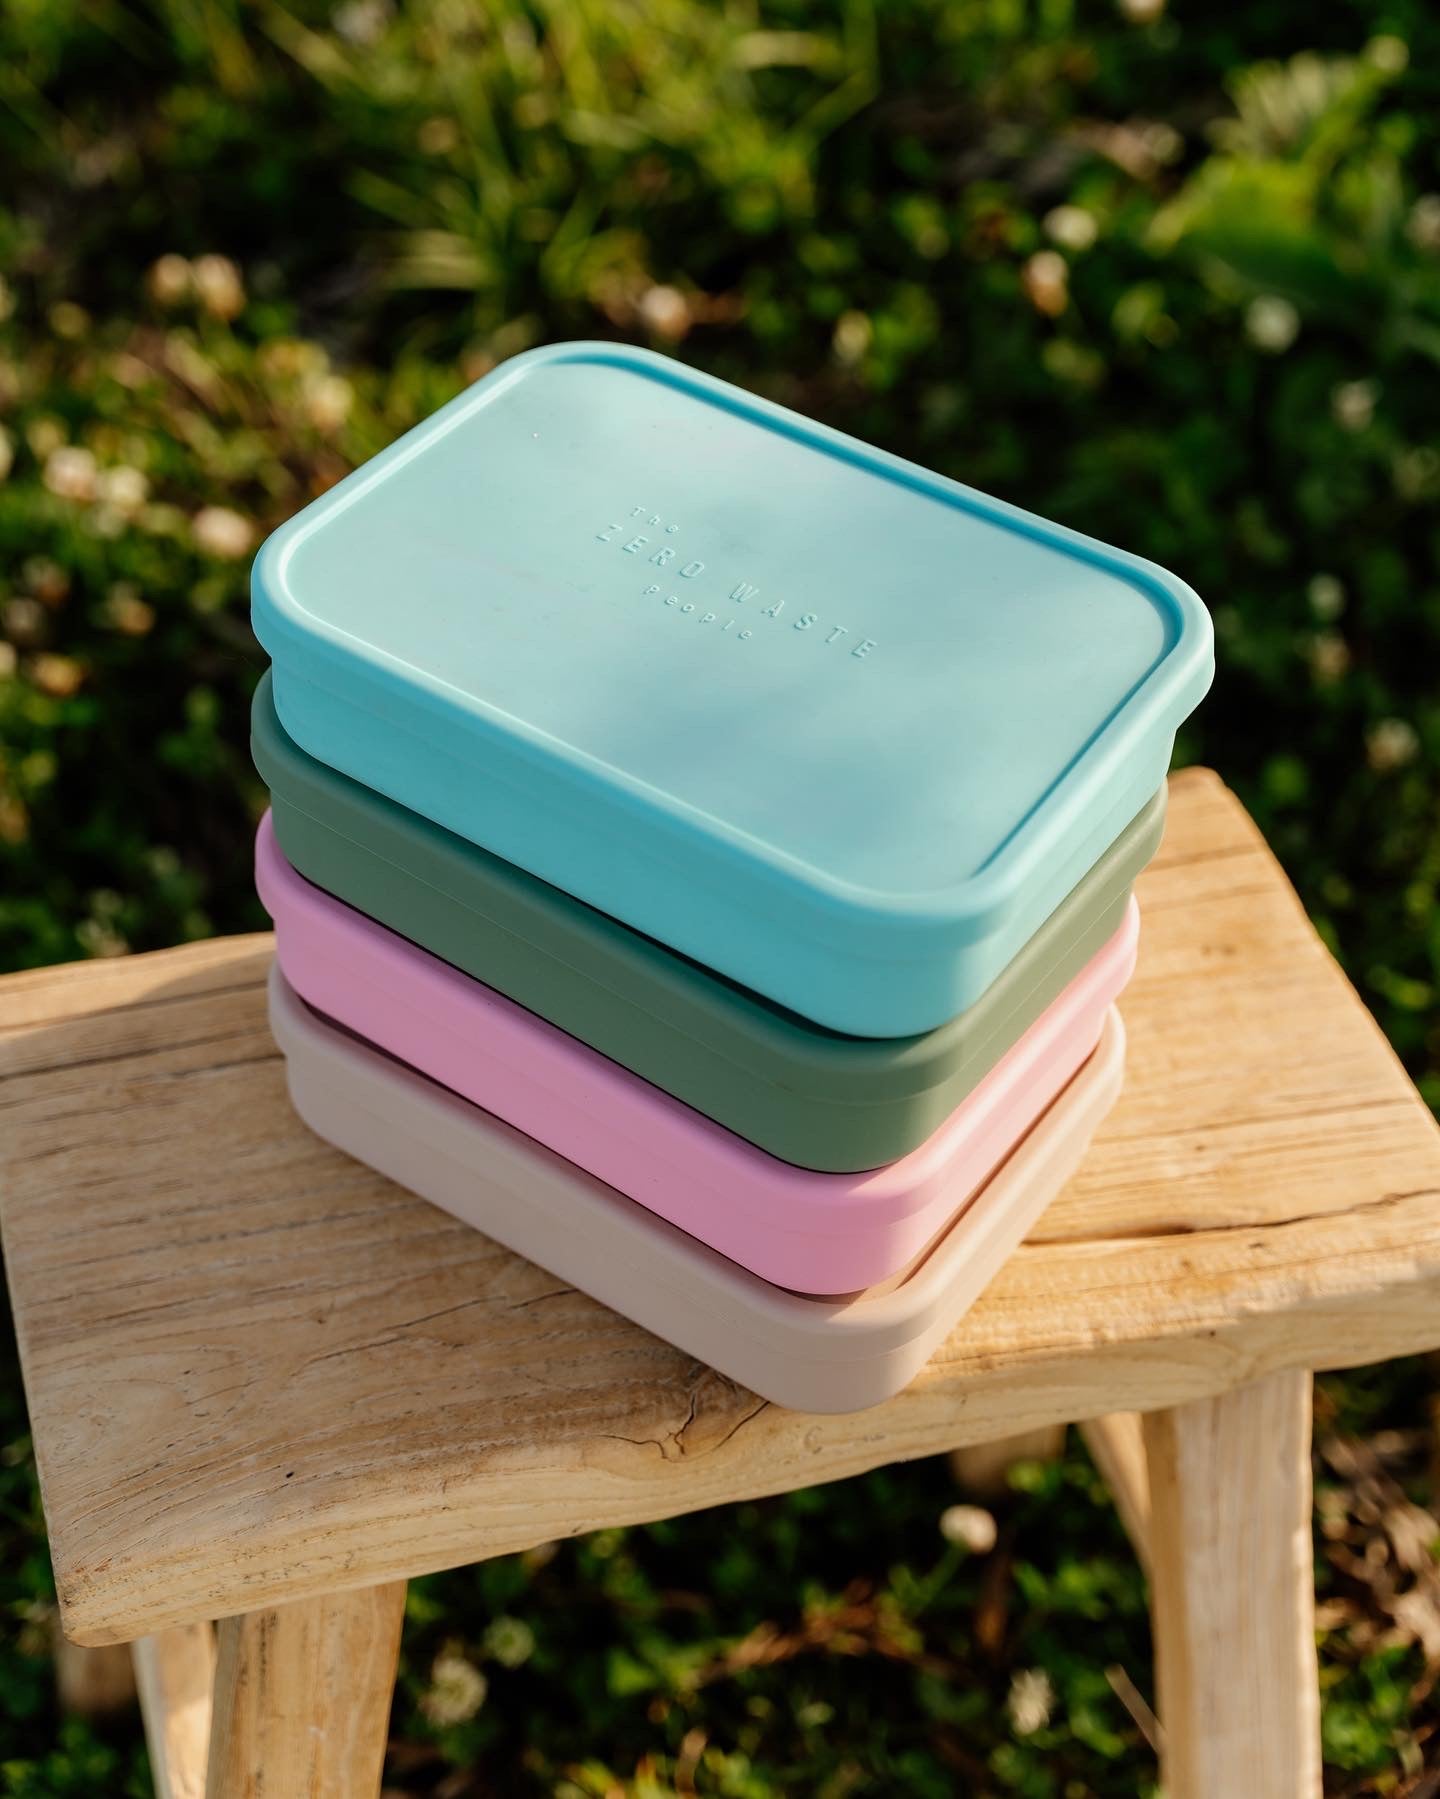 Aqua Bento Lunchbox